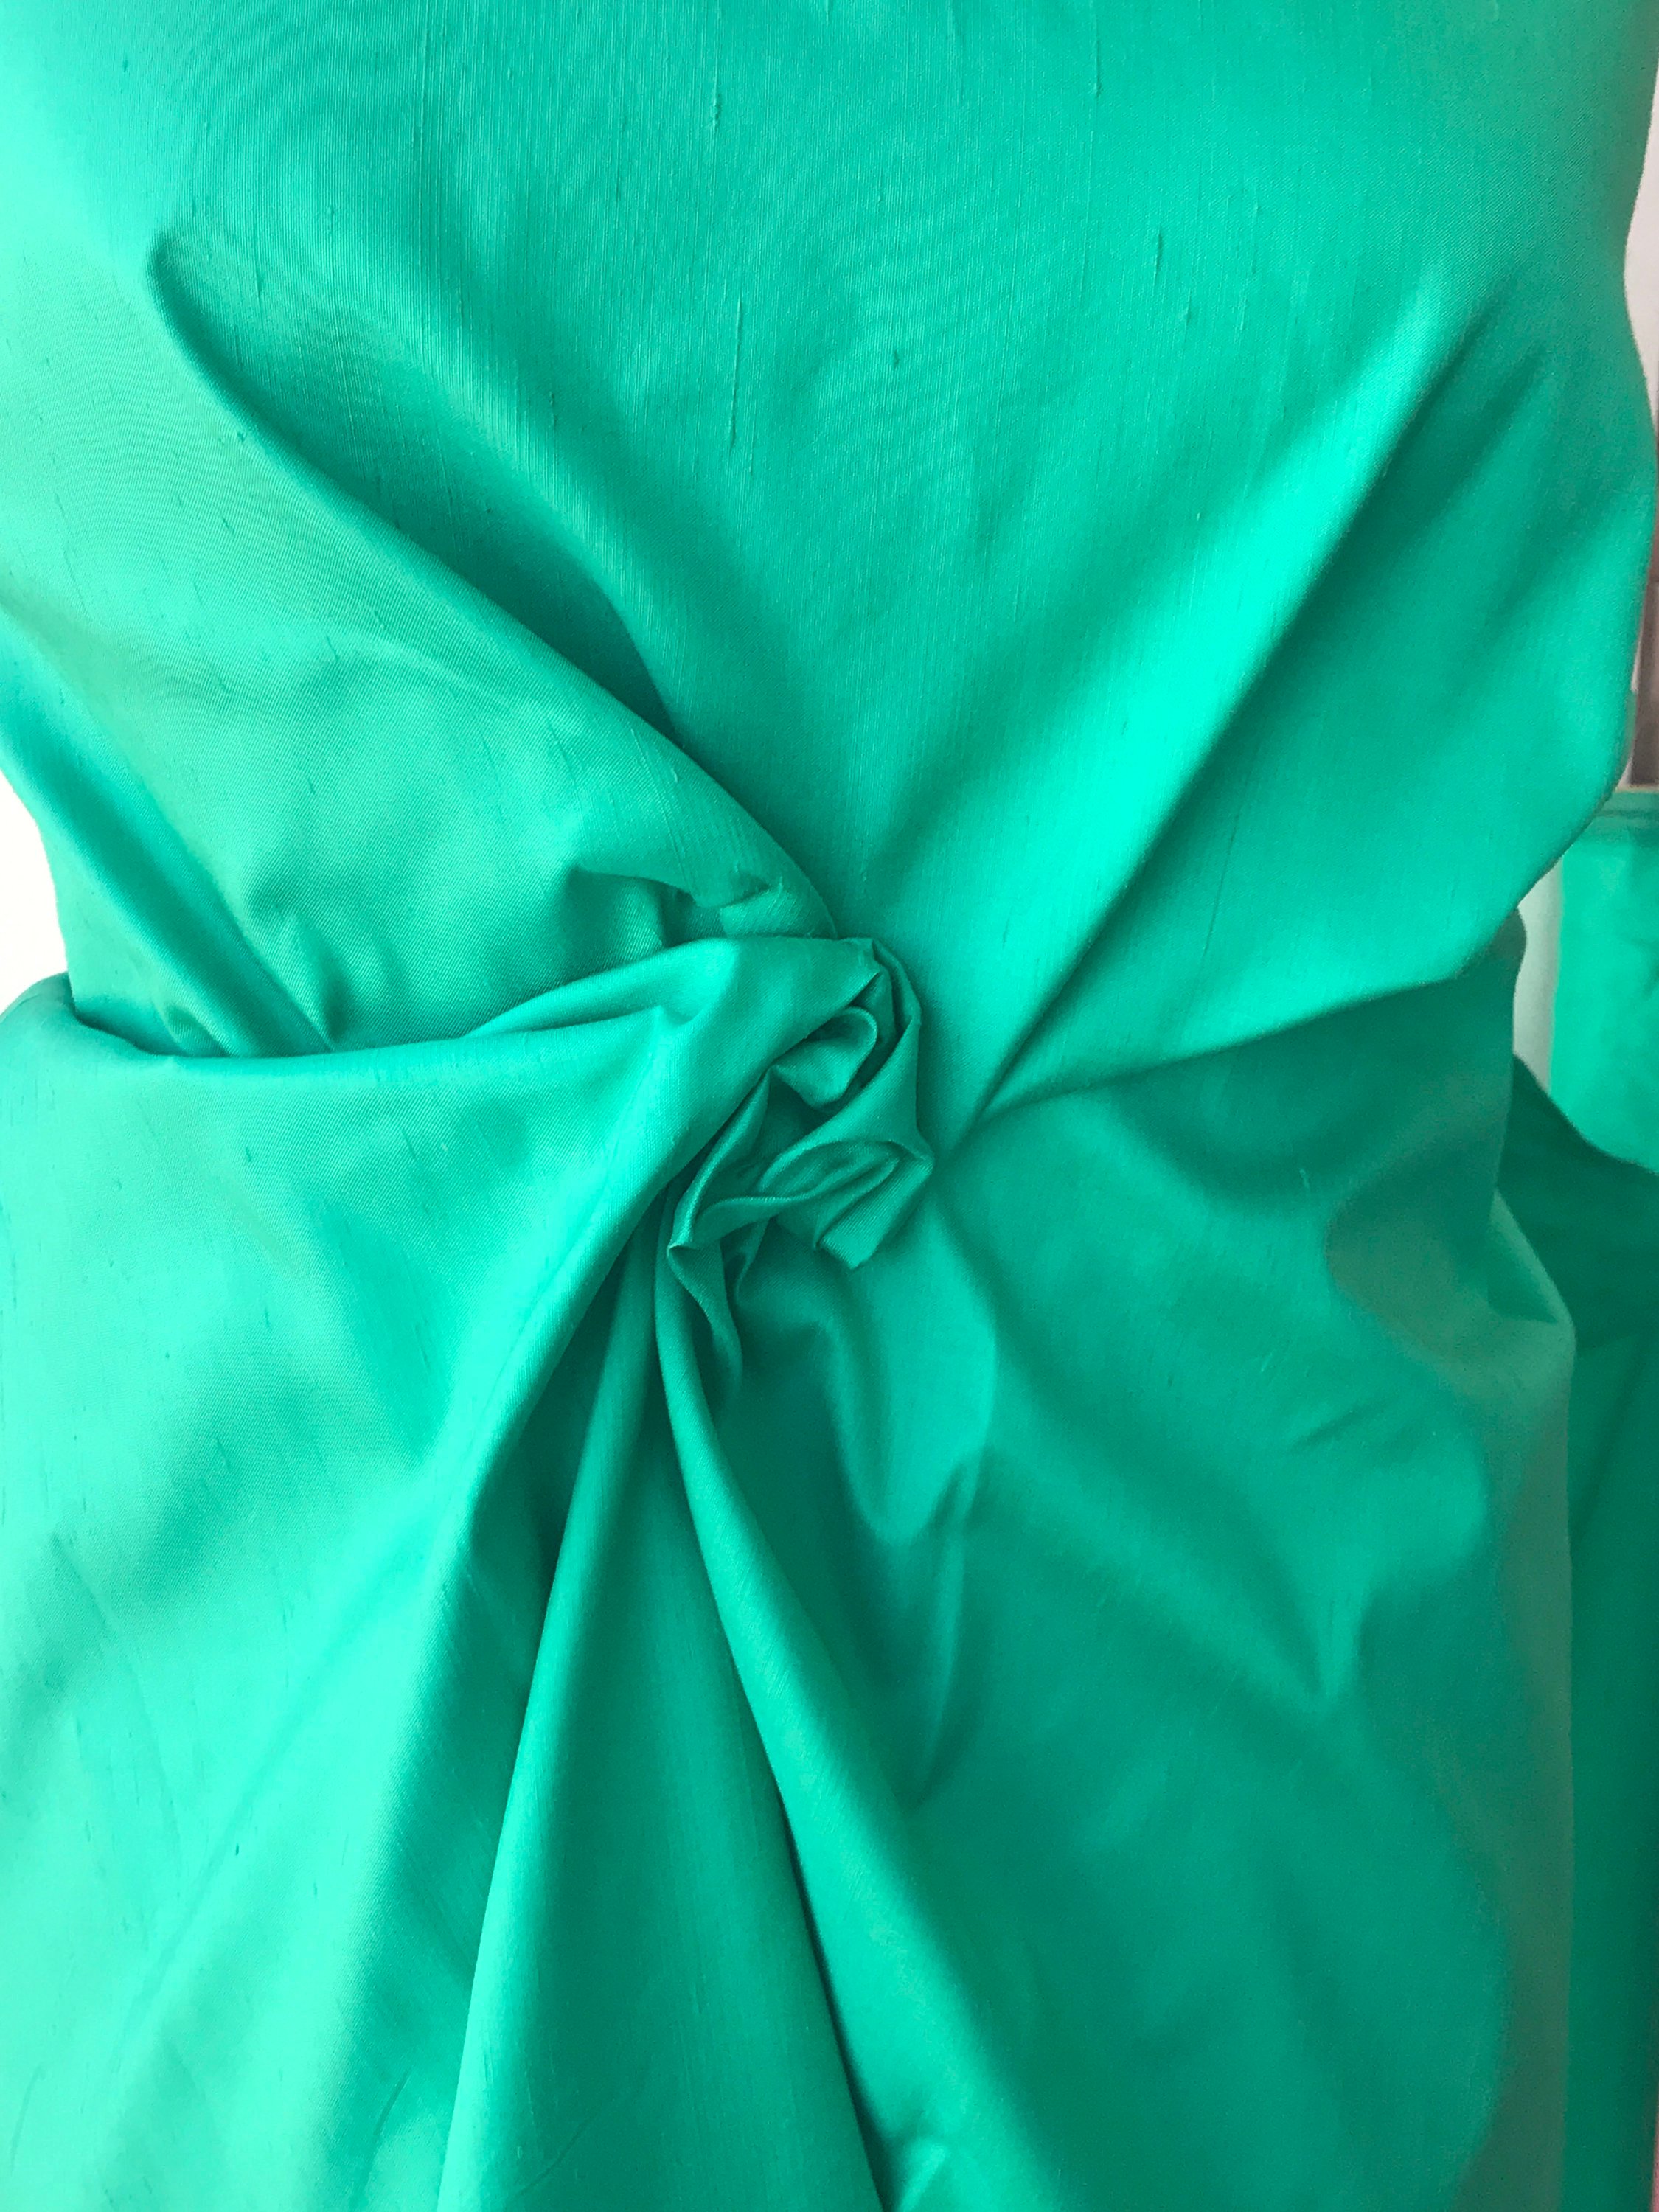 Green dupioni silk fabric